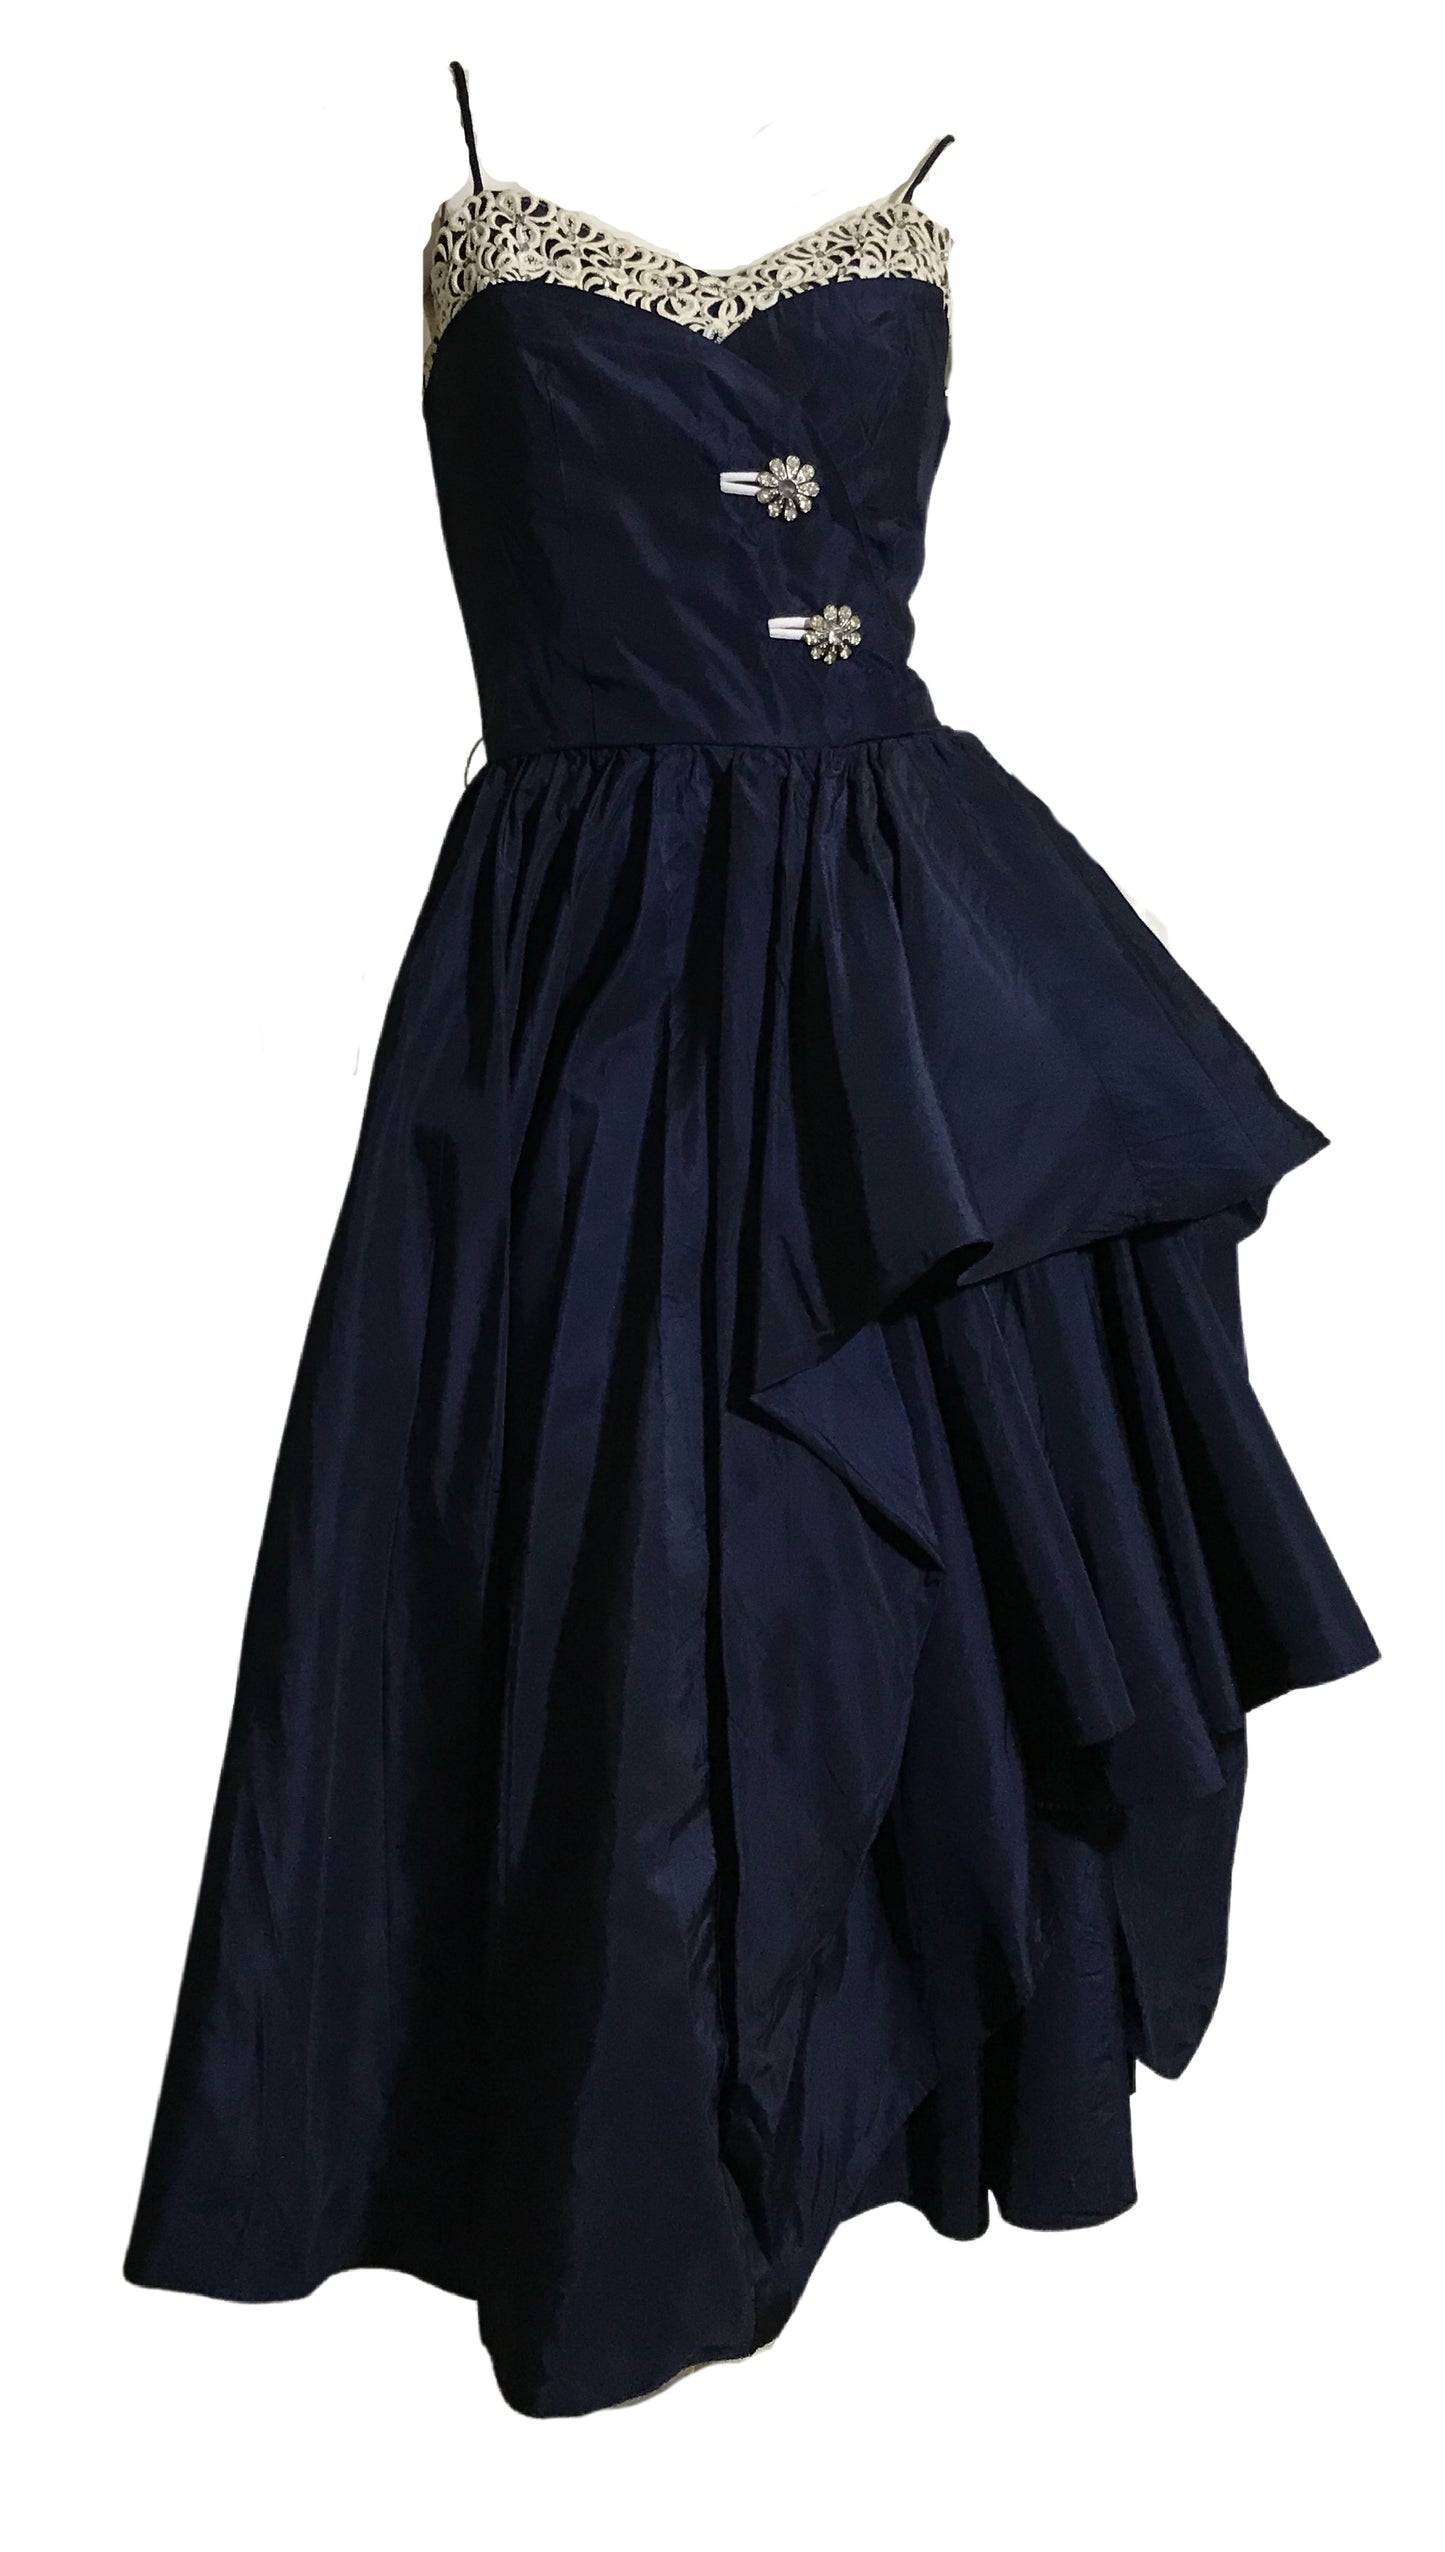 Rhinestone Button Trimmed Deep Blue Taffeta Cocktail Dress with Swagged Skirt circa 1940s